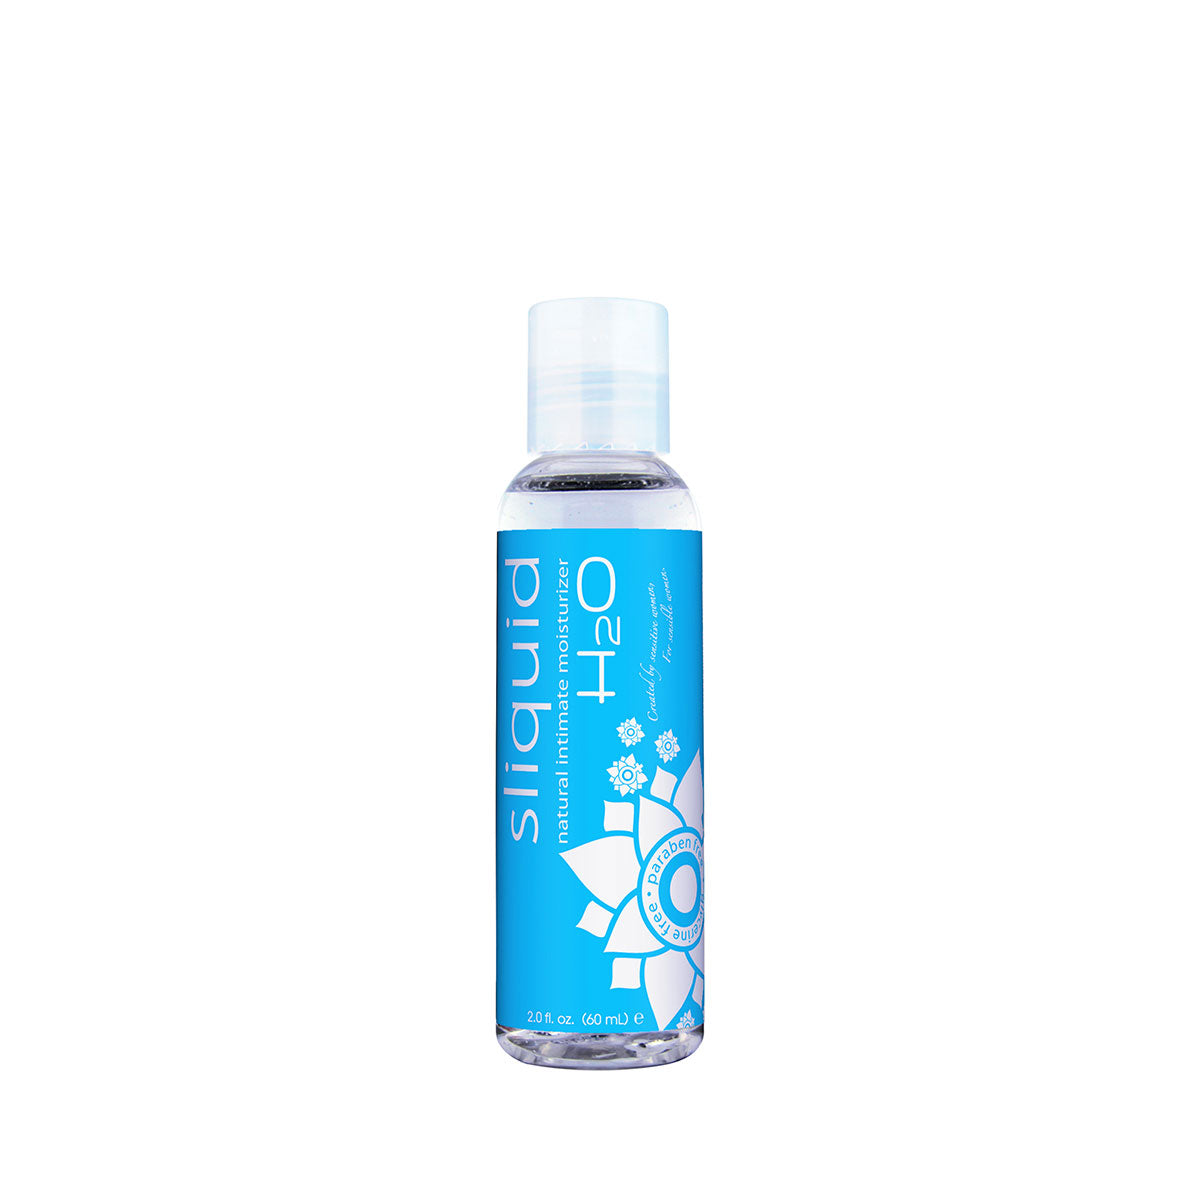 Sliquid H2O - Water-Based Lube Original Formula - 2oz